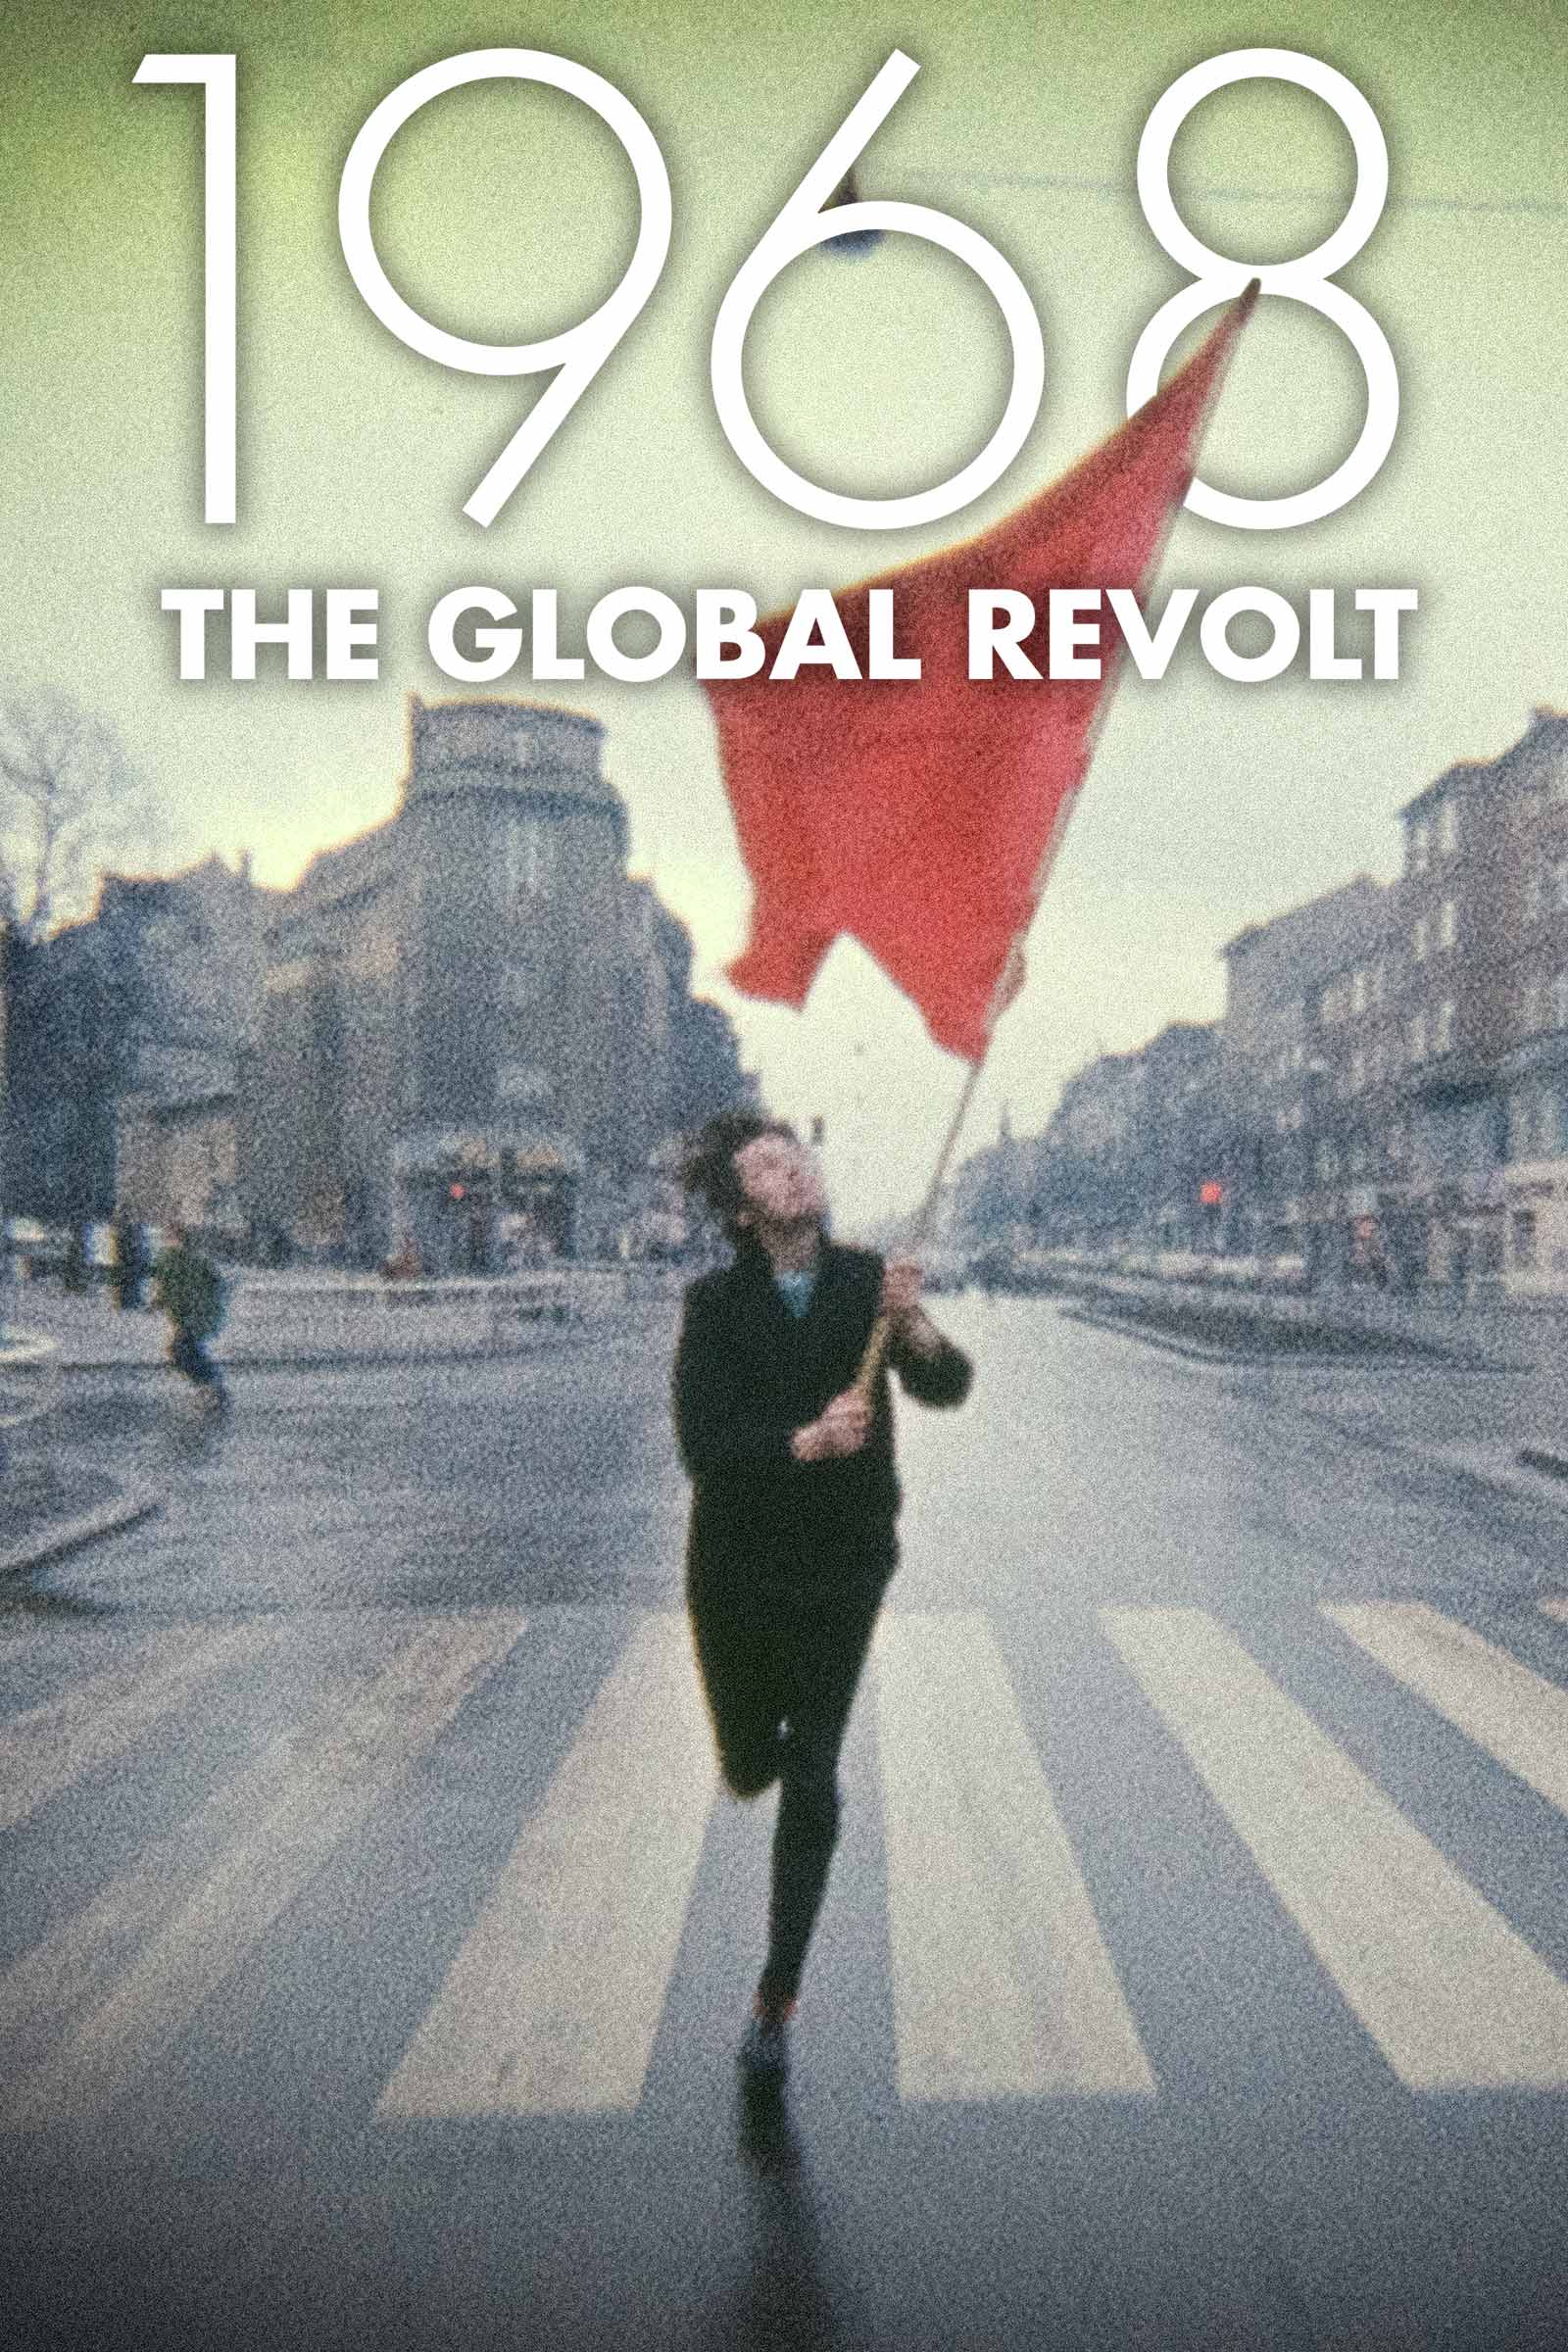 Where to stream 1968: The Global Revolt